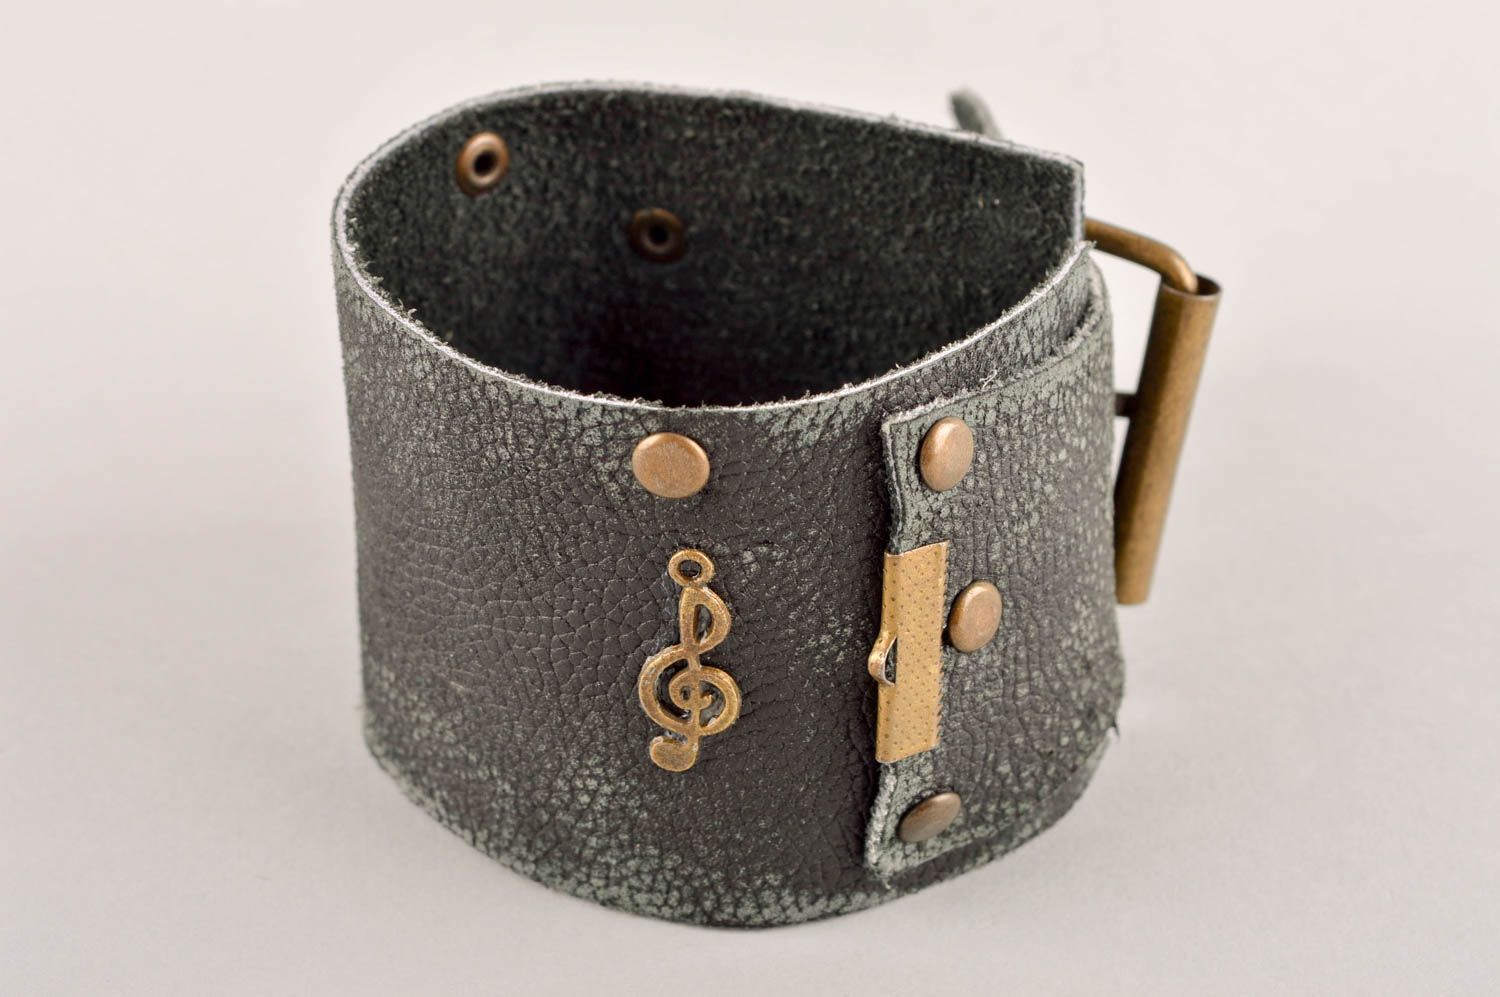 Handmade leather bracelet designs wide bracelet fashion accessories for girls photo 4